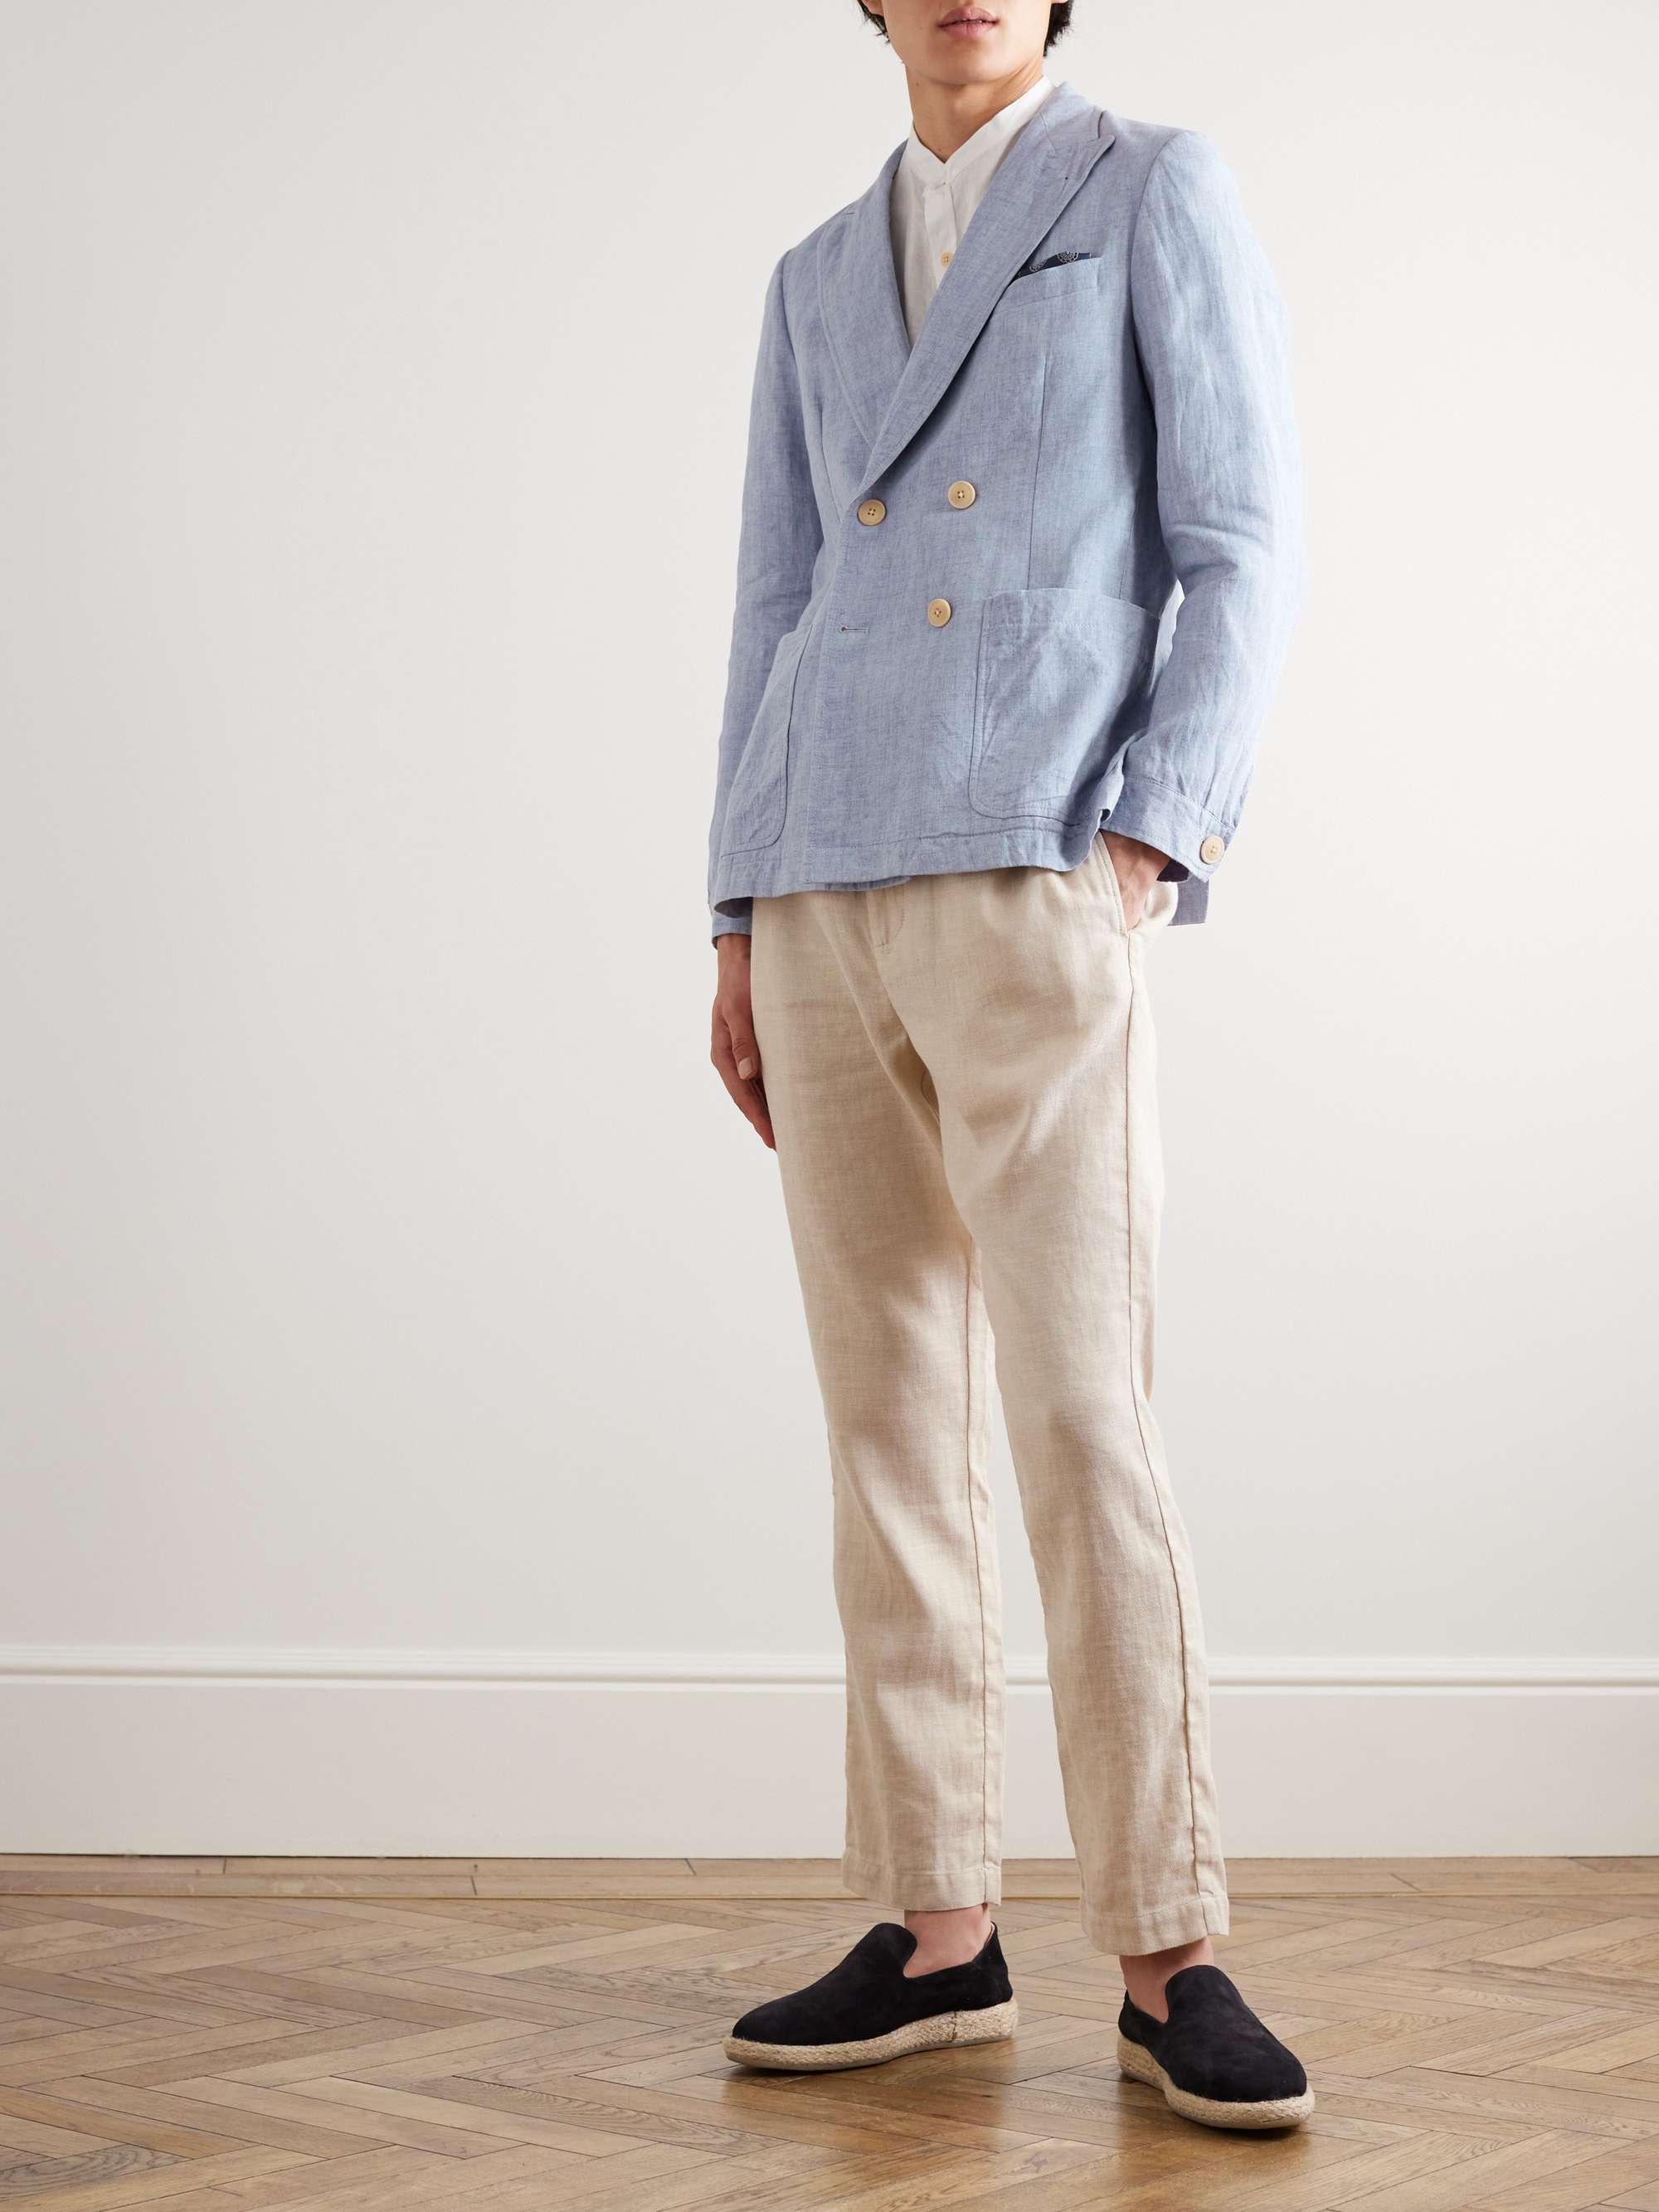 OLIVER SPENCER Double-Breasted Linen Suit Jacket